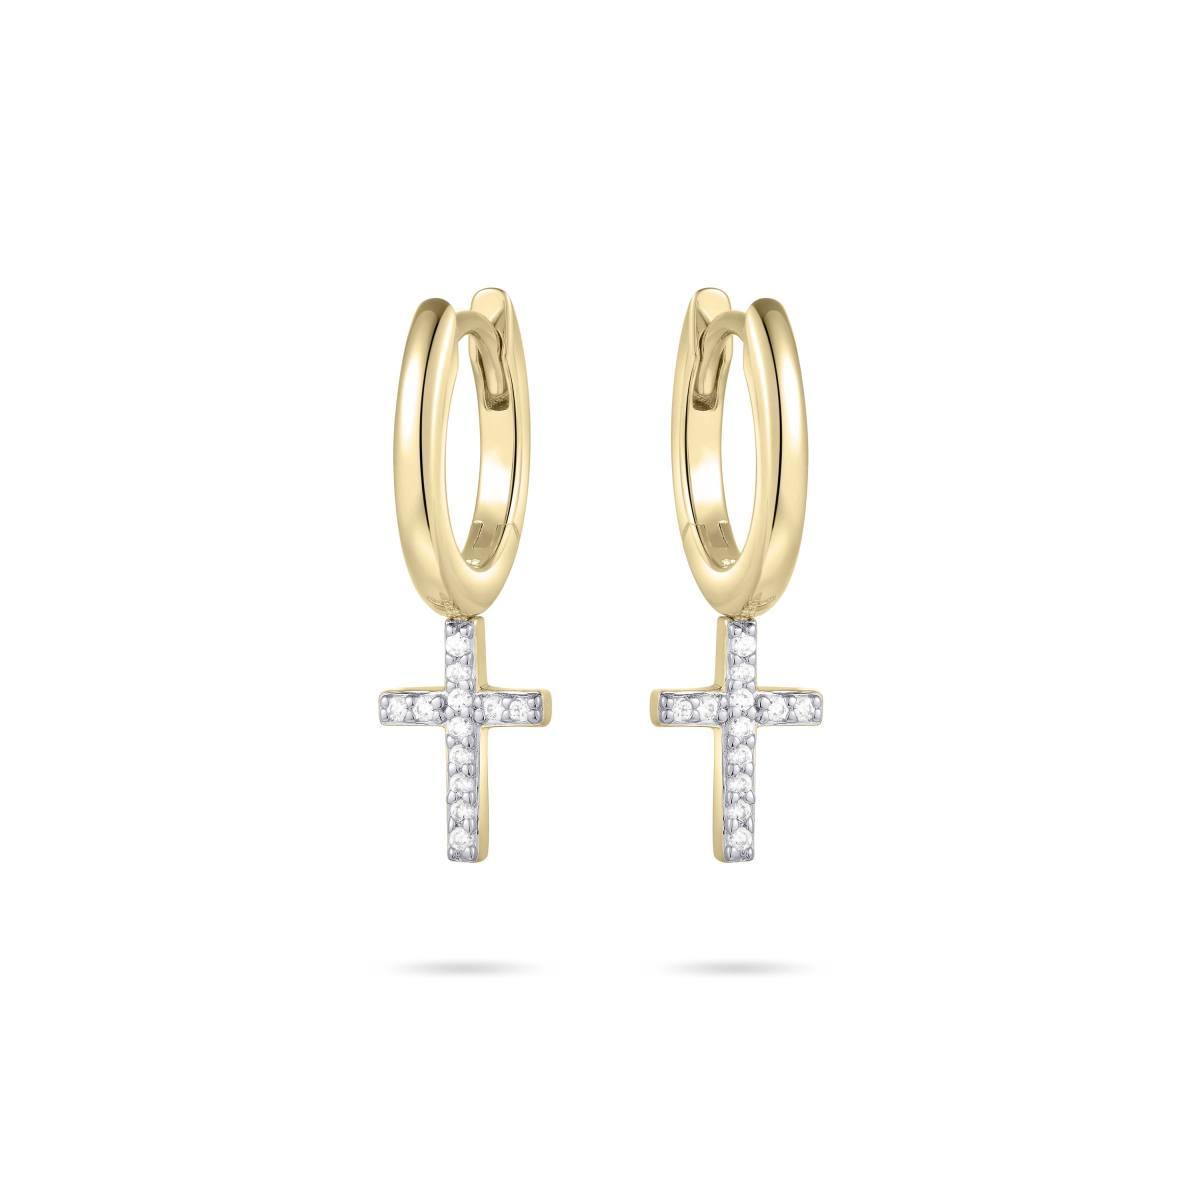 Gold Vermeil Sterling Silver Hoop Earrings with Dangling Crosses - Rococo Jewellery